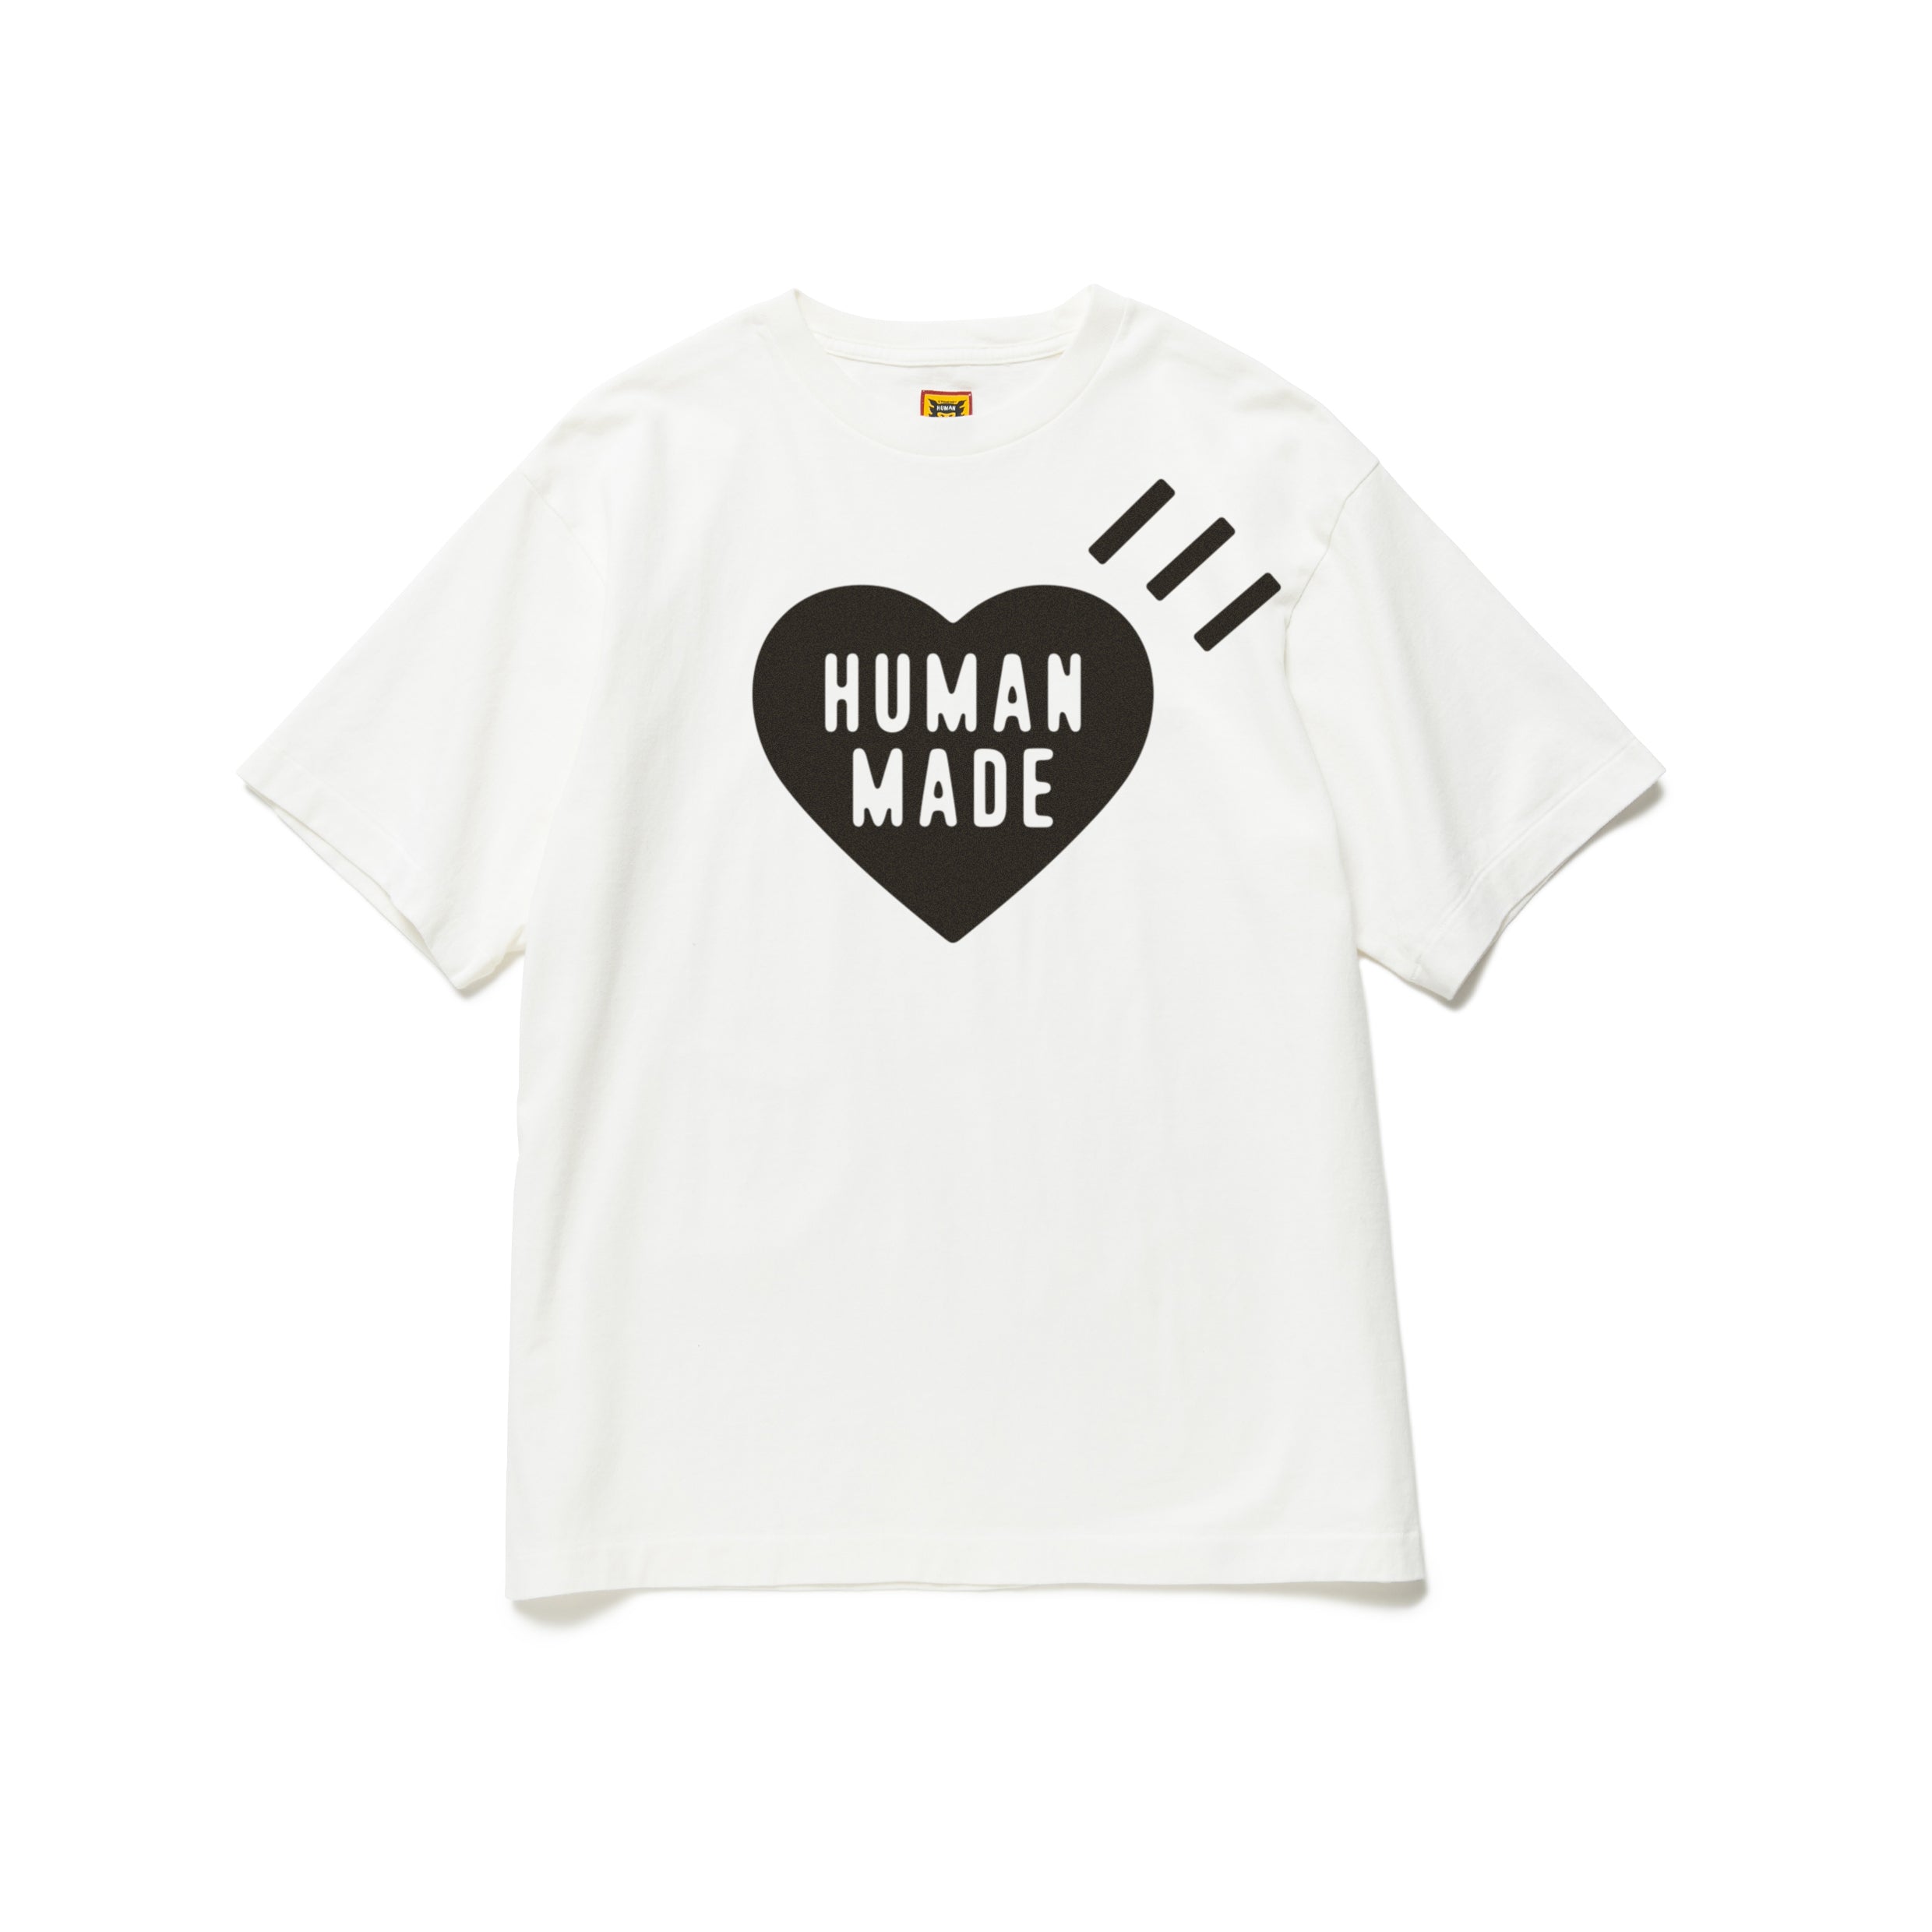 HUMAN MADE Tシャツ 2XL